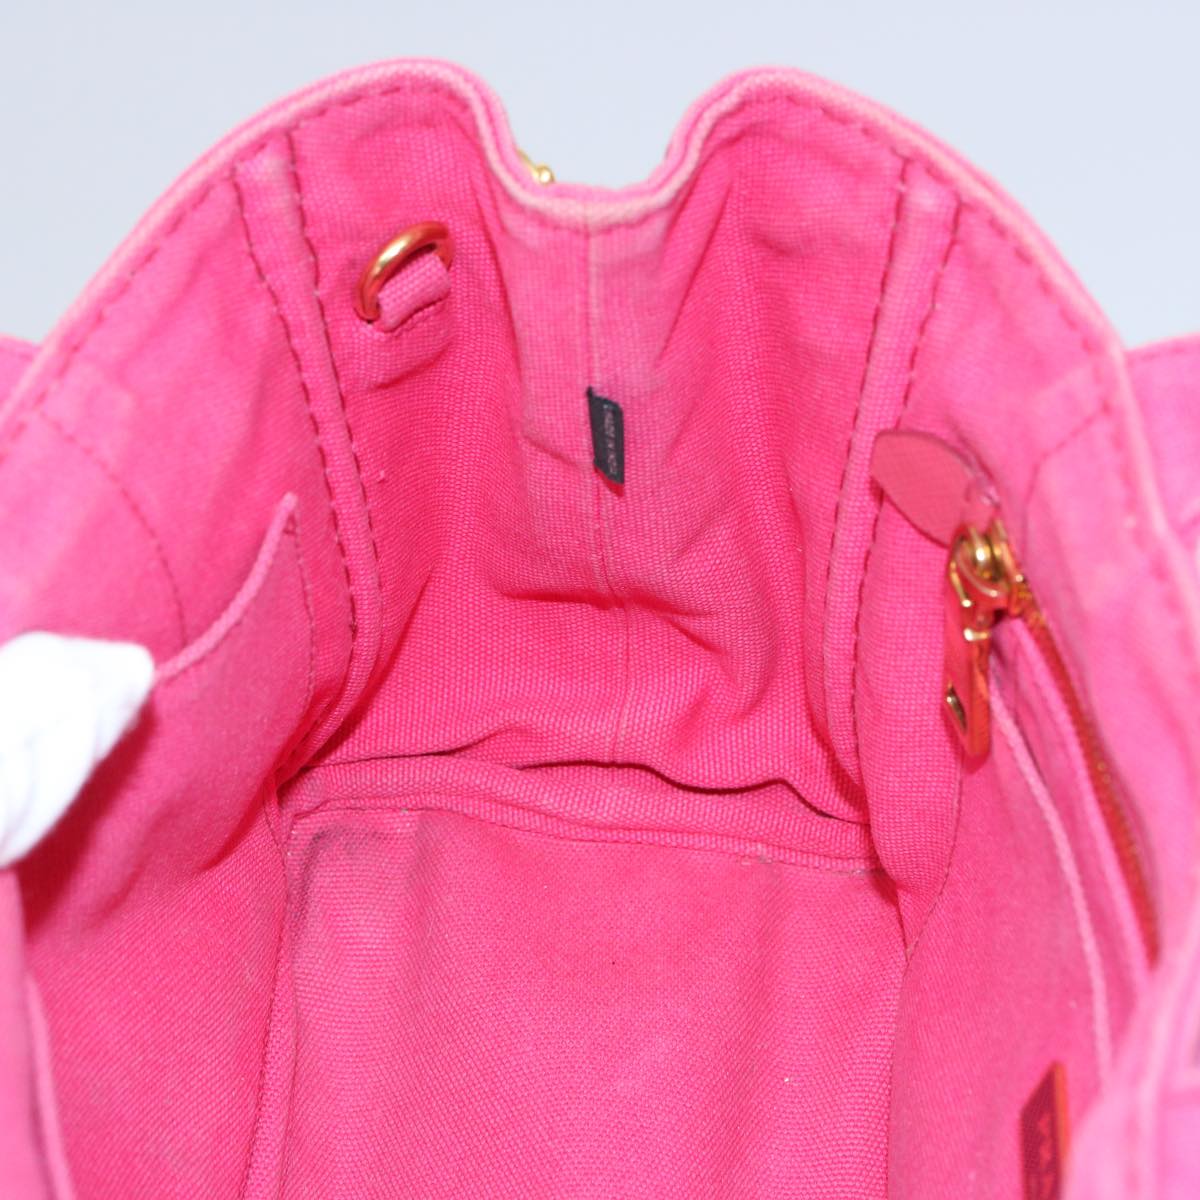 PRADA Canapa PM Hand Bag Canvas Pink Auth bs10835